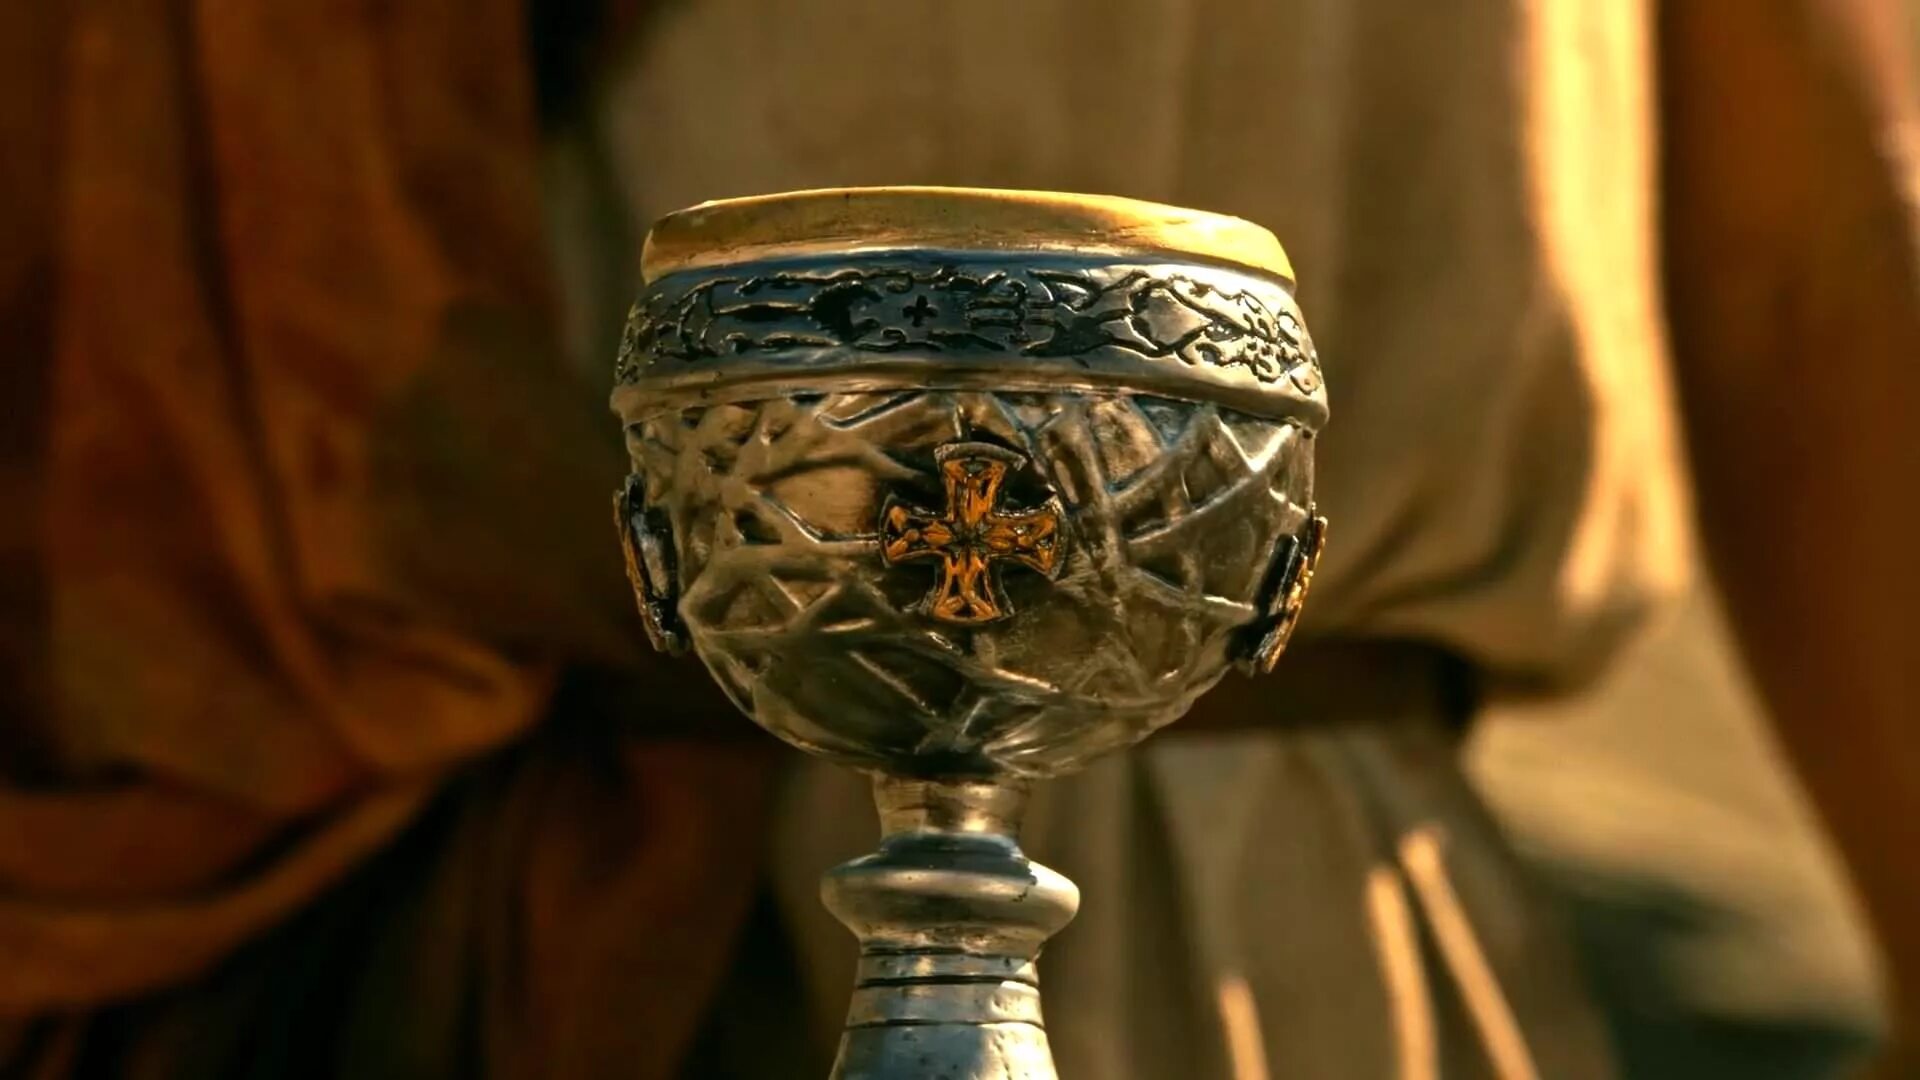 Святой грааль. Чаша Святого Грааля. Грааль чаша Христа. Кубок Святой Грааль. Святой Грааль Иисуса Христа.